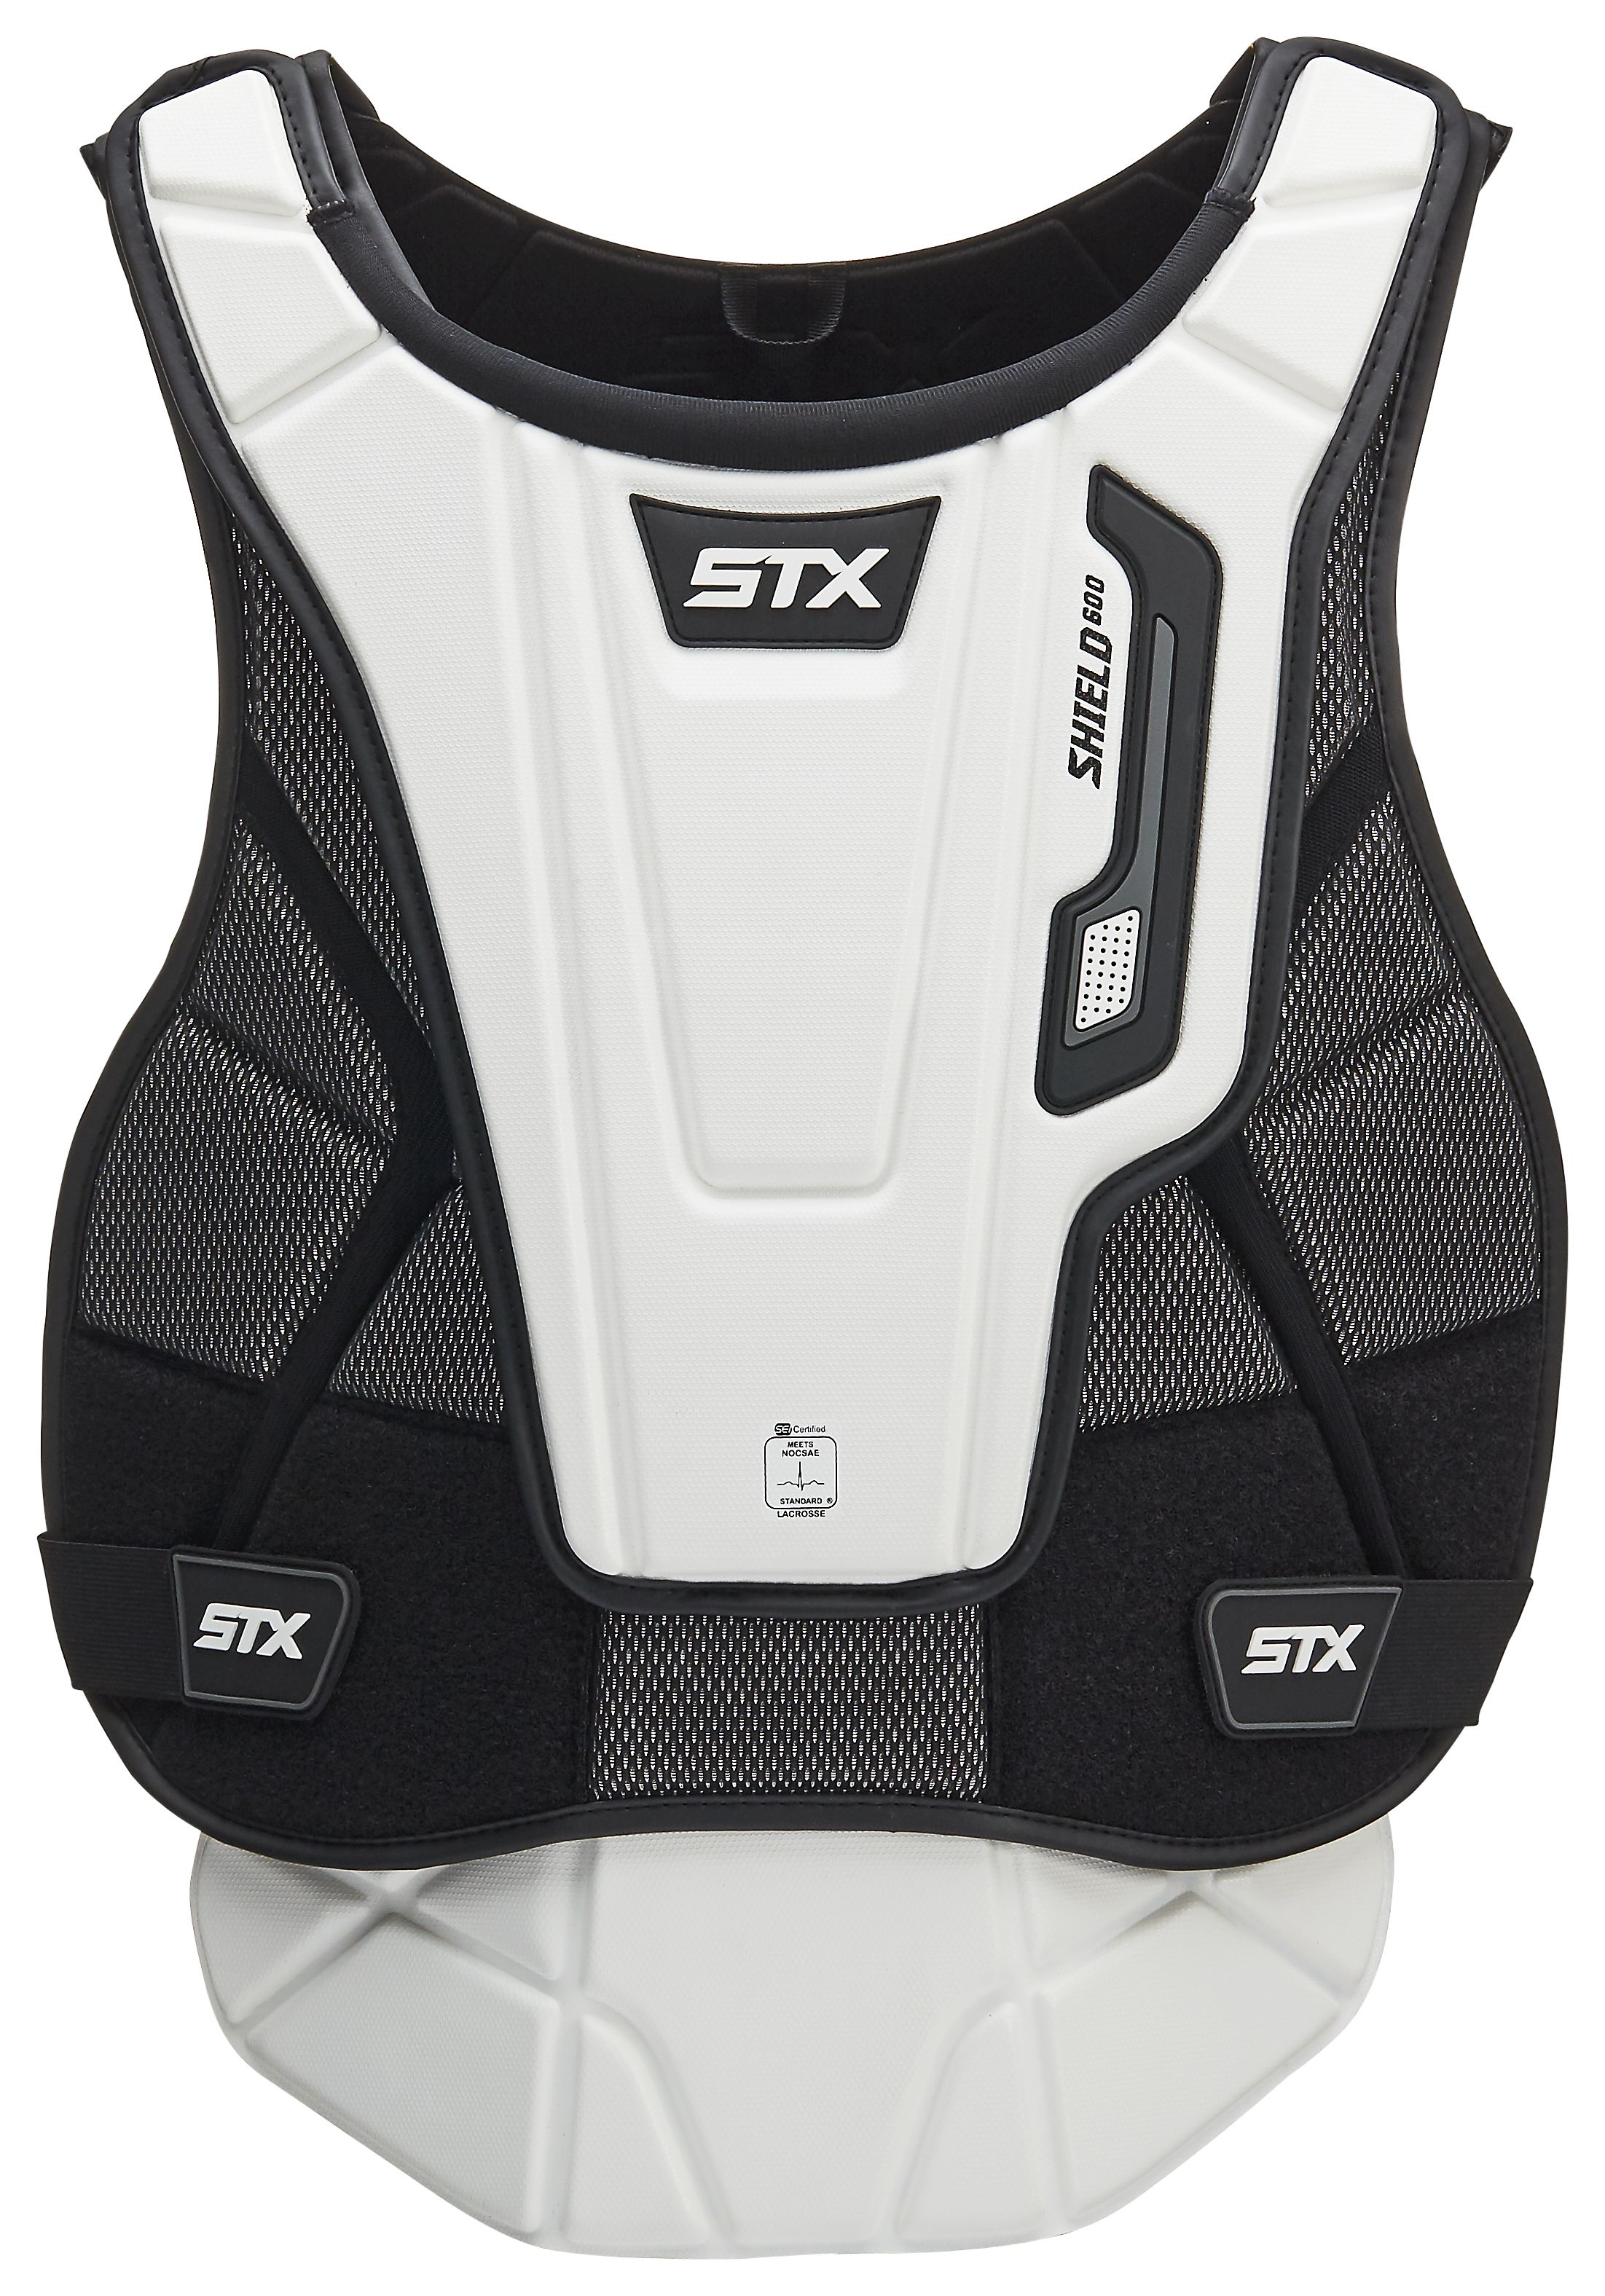 STX Shield Field Hockey Goalie Stick 36.5 